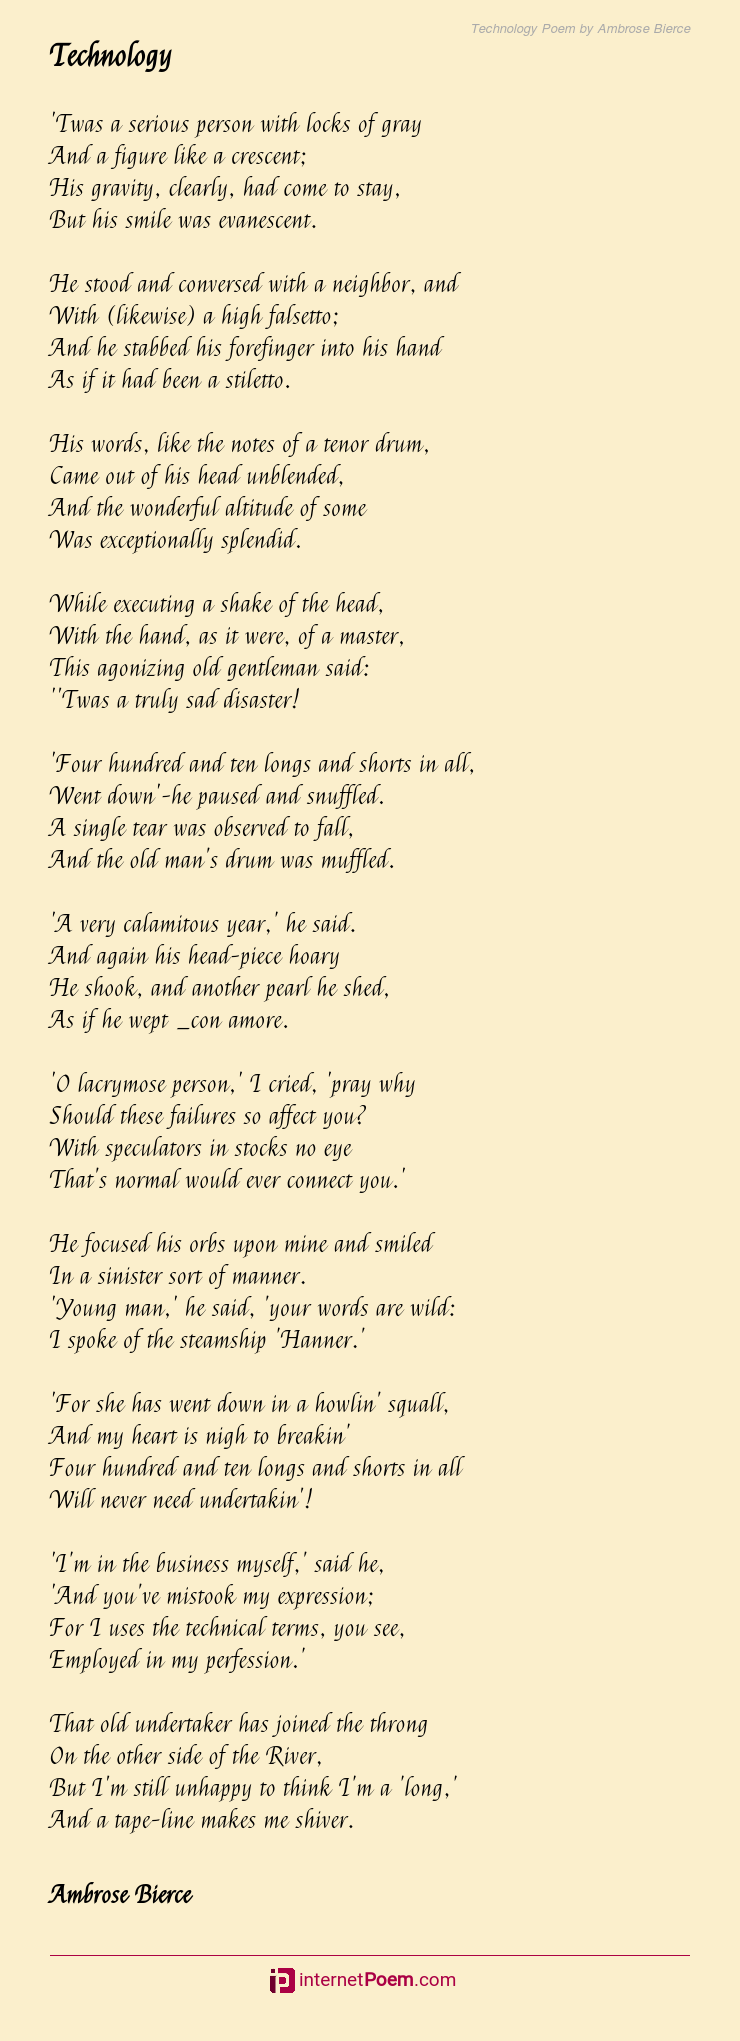 Technology Poem by Ambrose Bierce